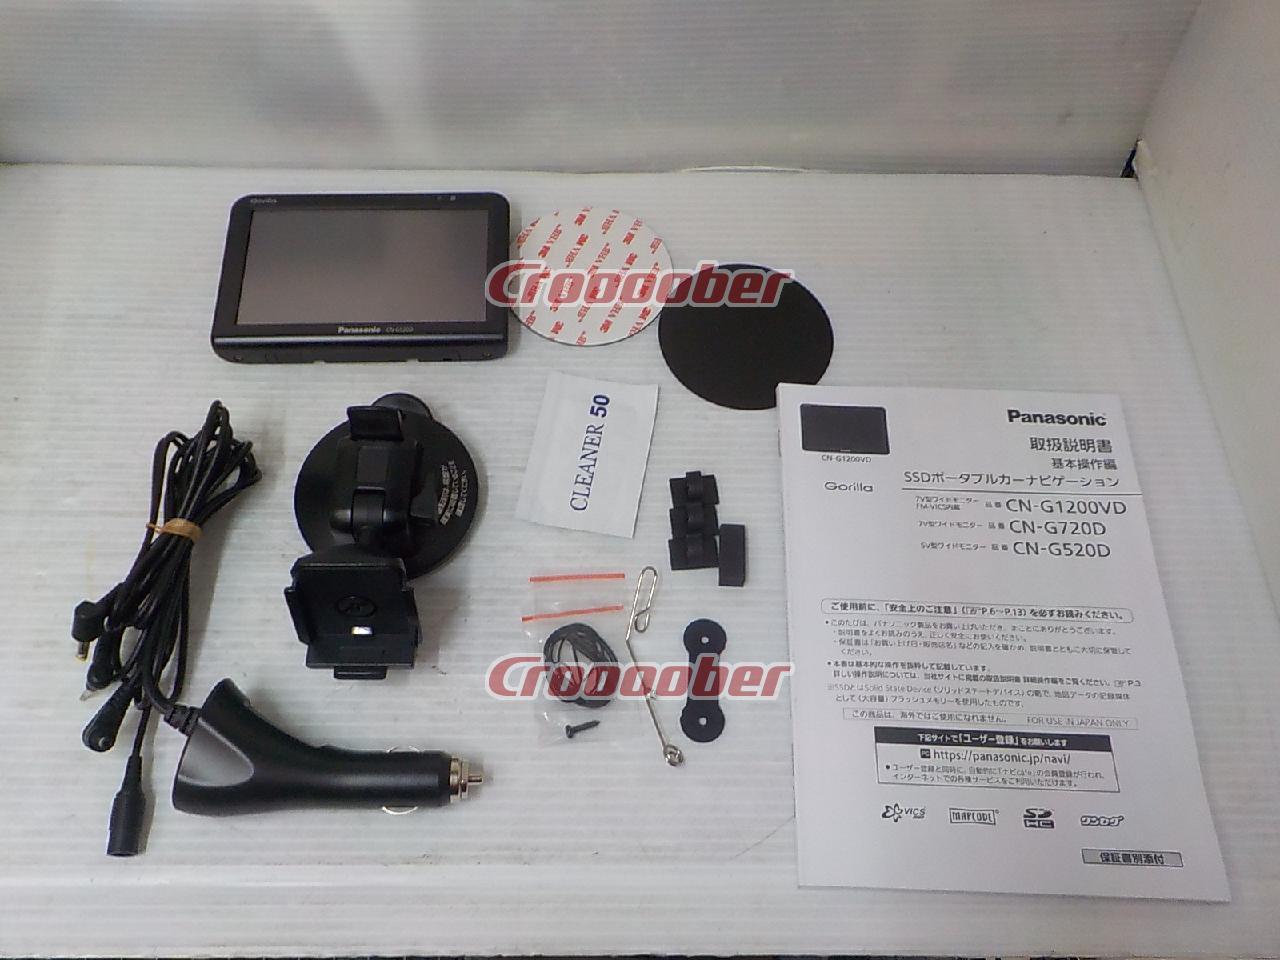 Panasonic GORILLA CN-G520D | Portable Memory Navigation(digital